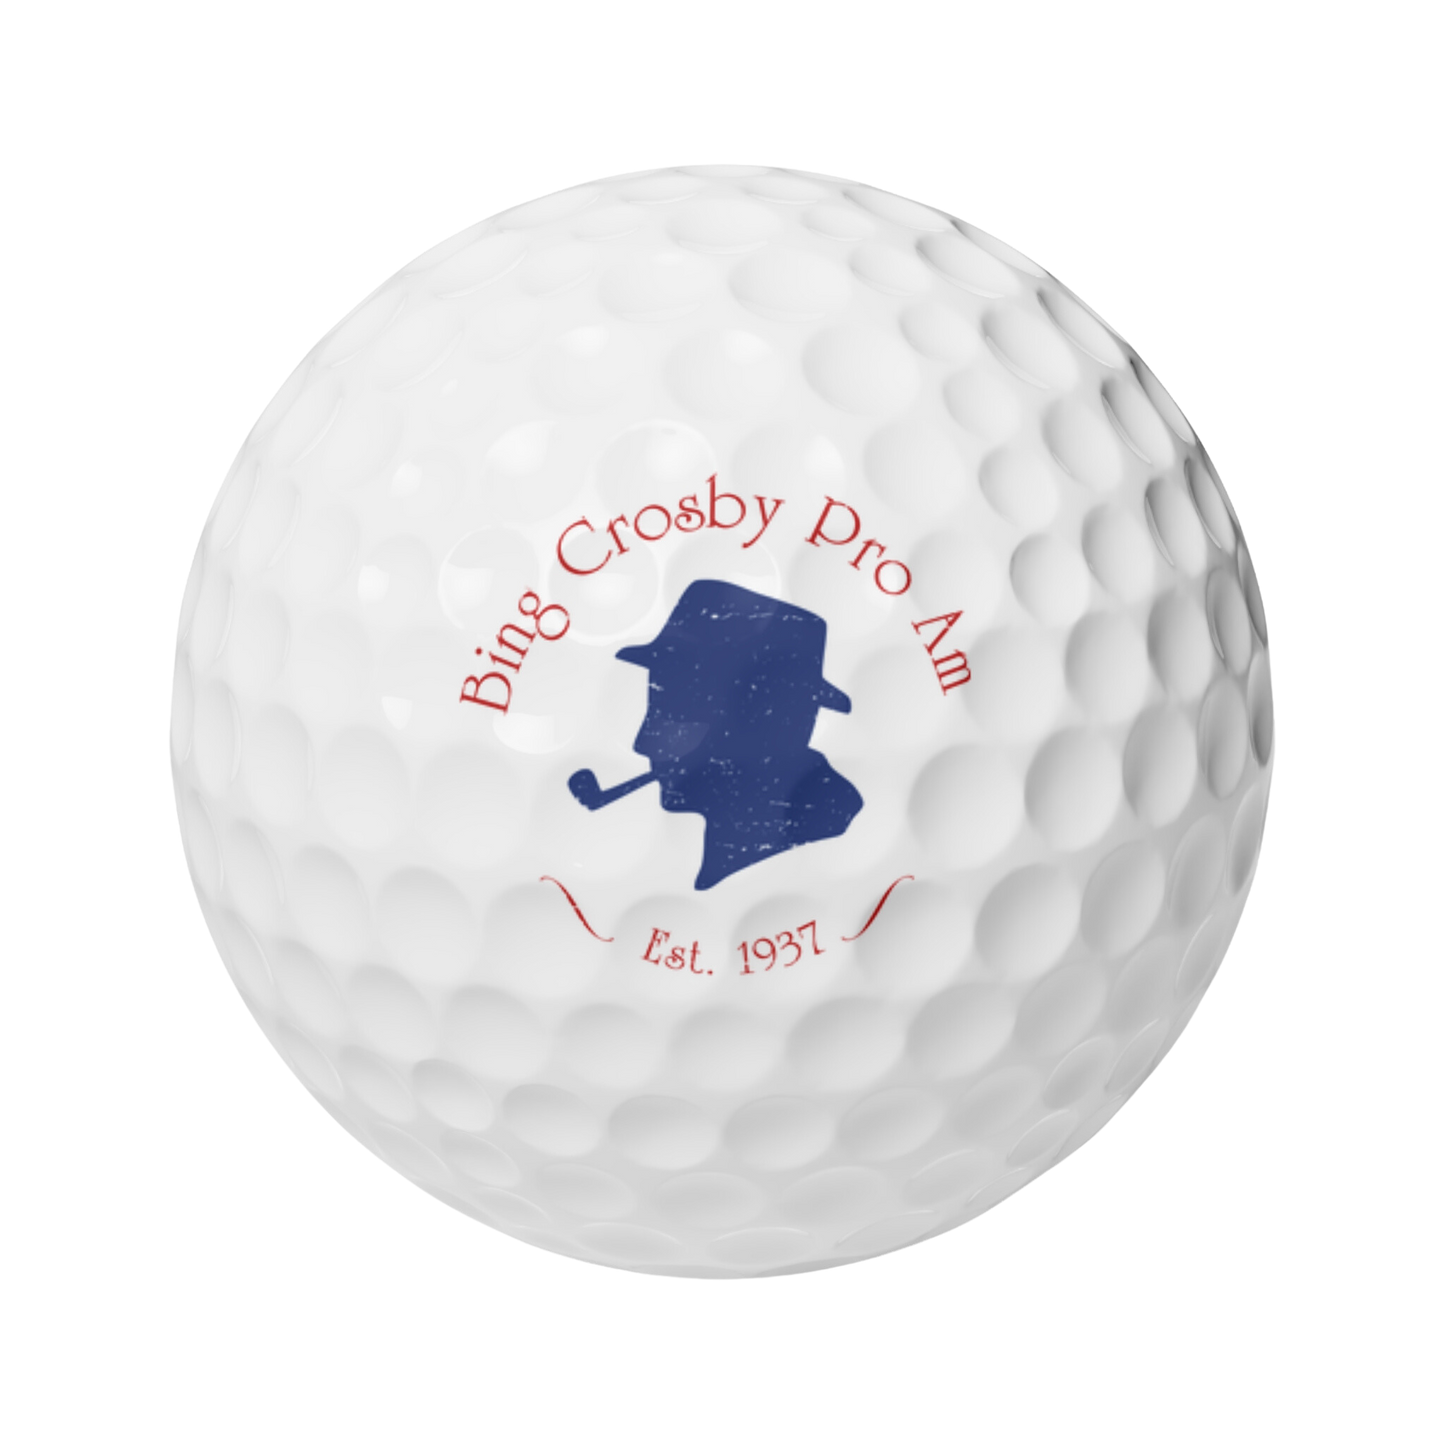 Bing Crosby Pro Am Golf Balls